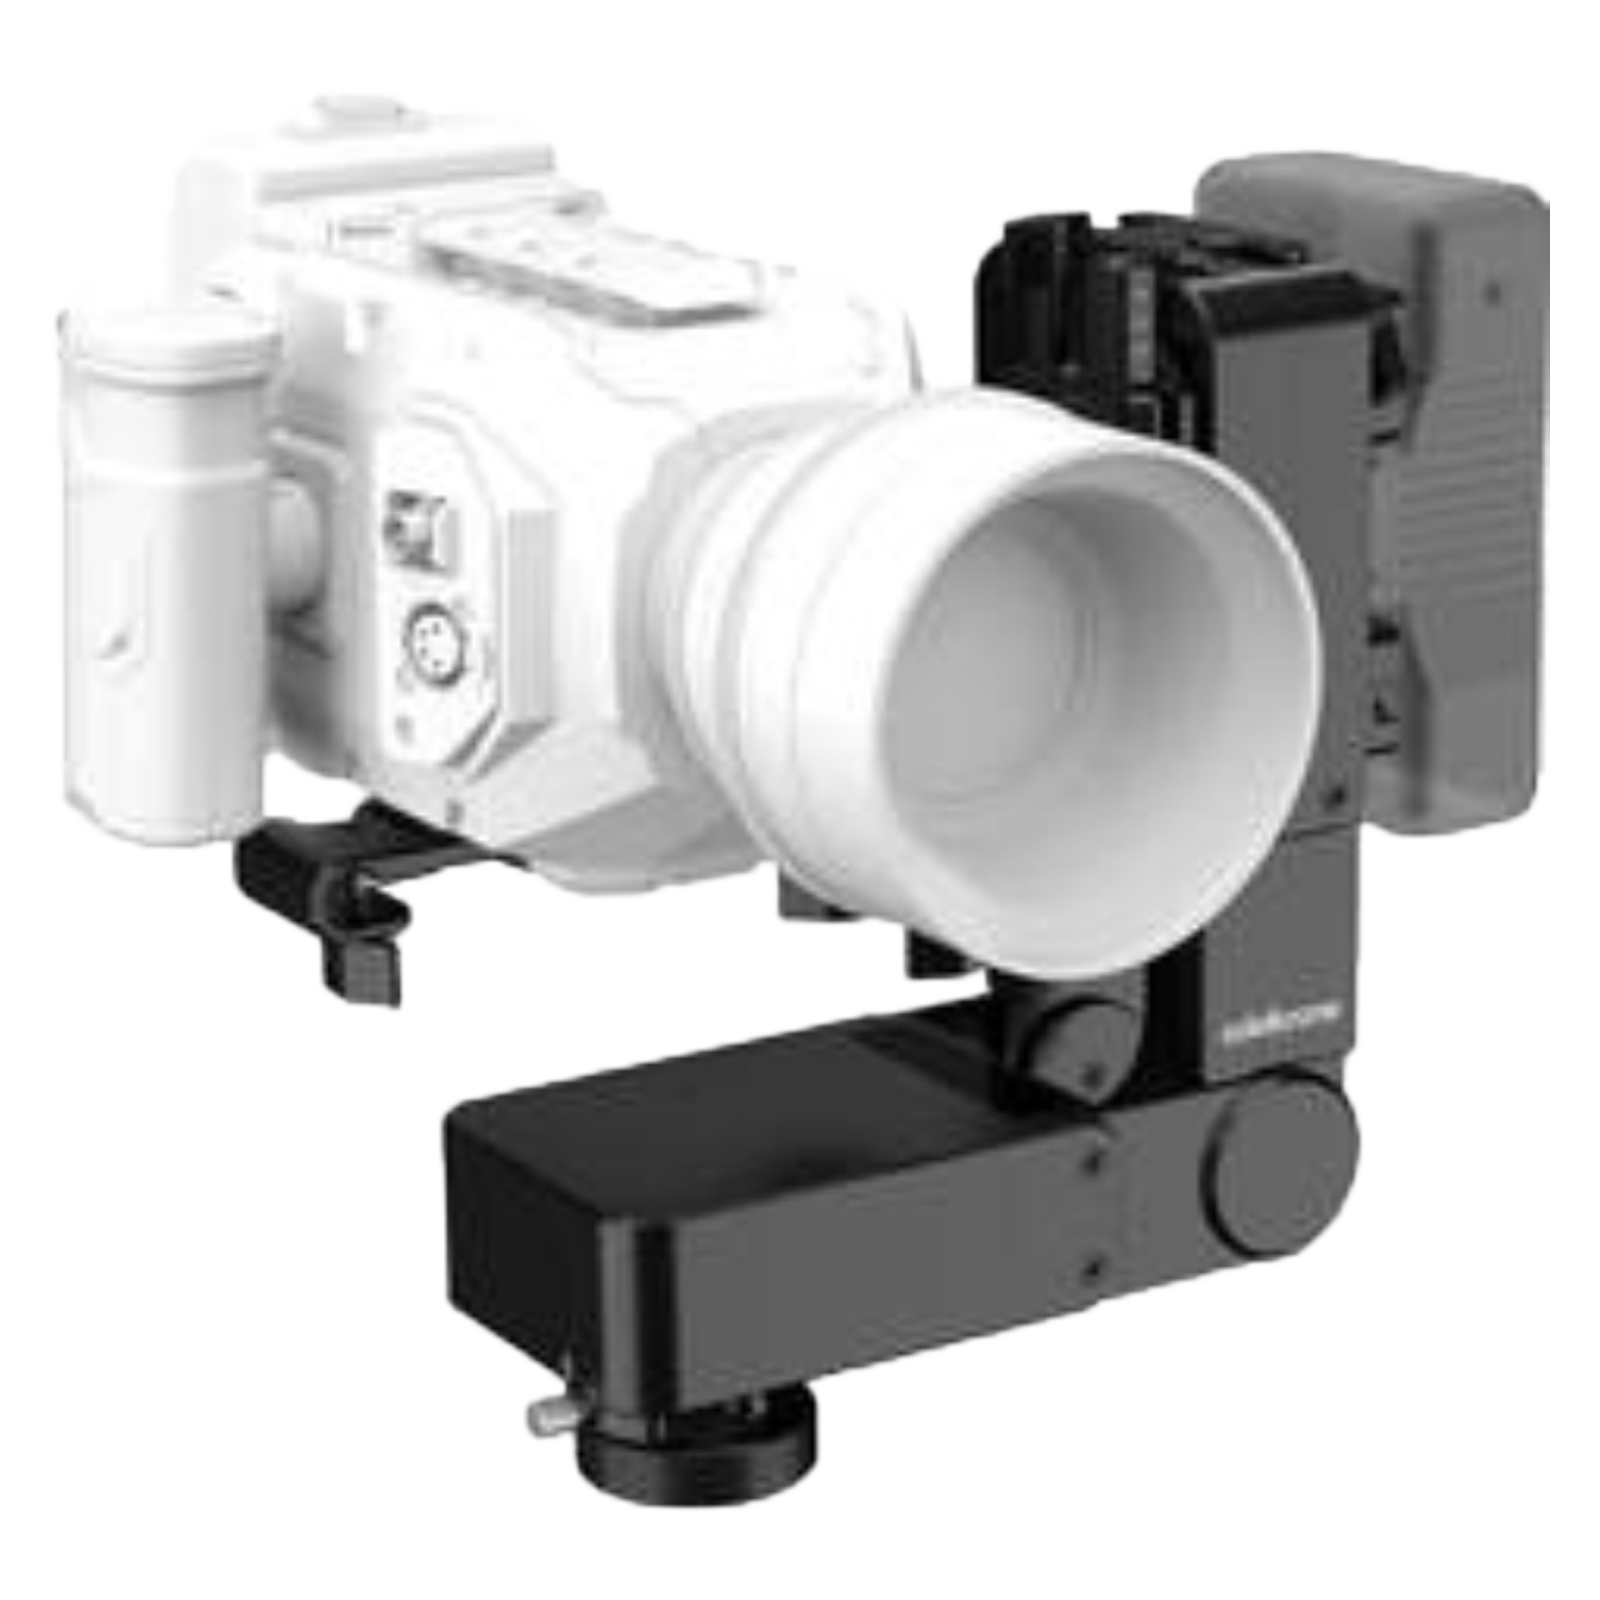 Edelkrone HeadPLUS PRO For Mount DSLR Camera (Motorized Pan, EDL-HP, Black)_1